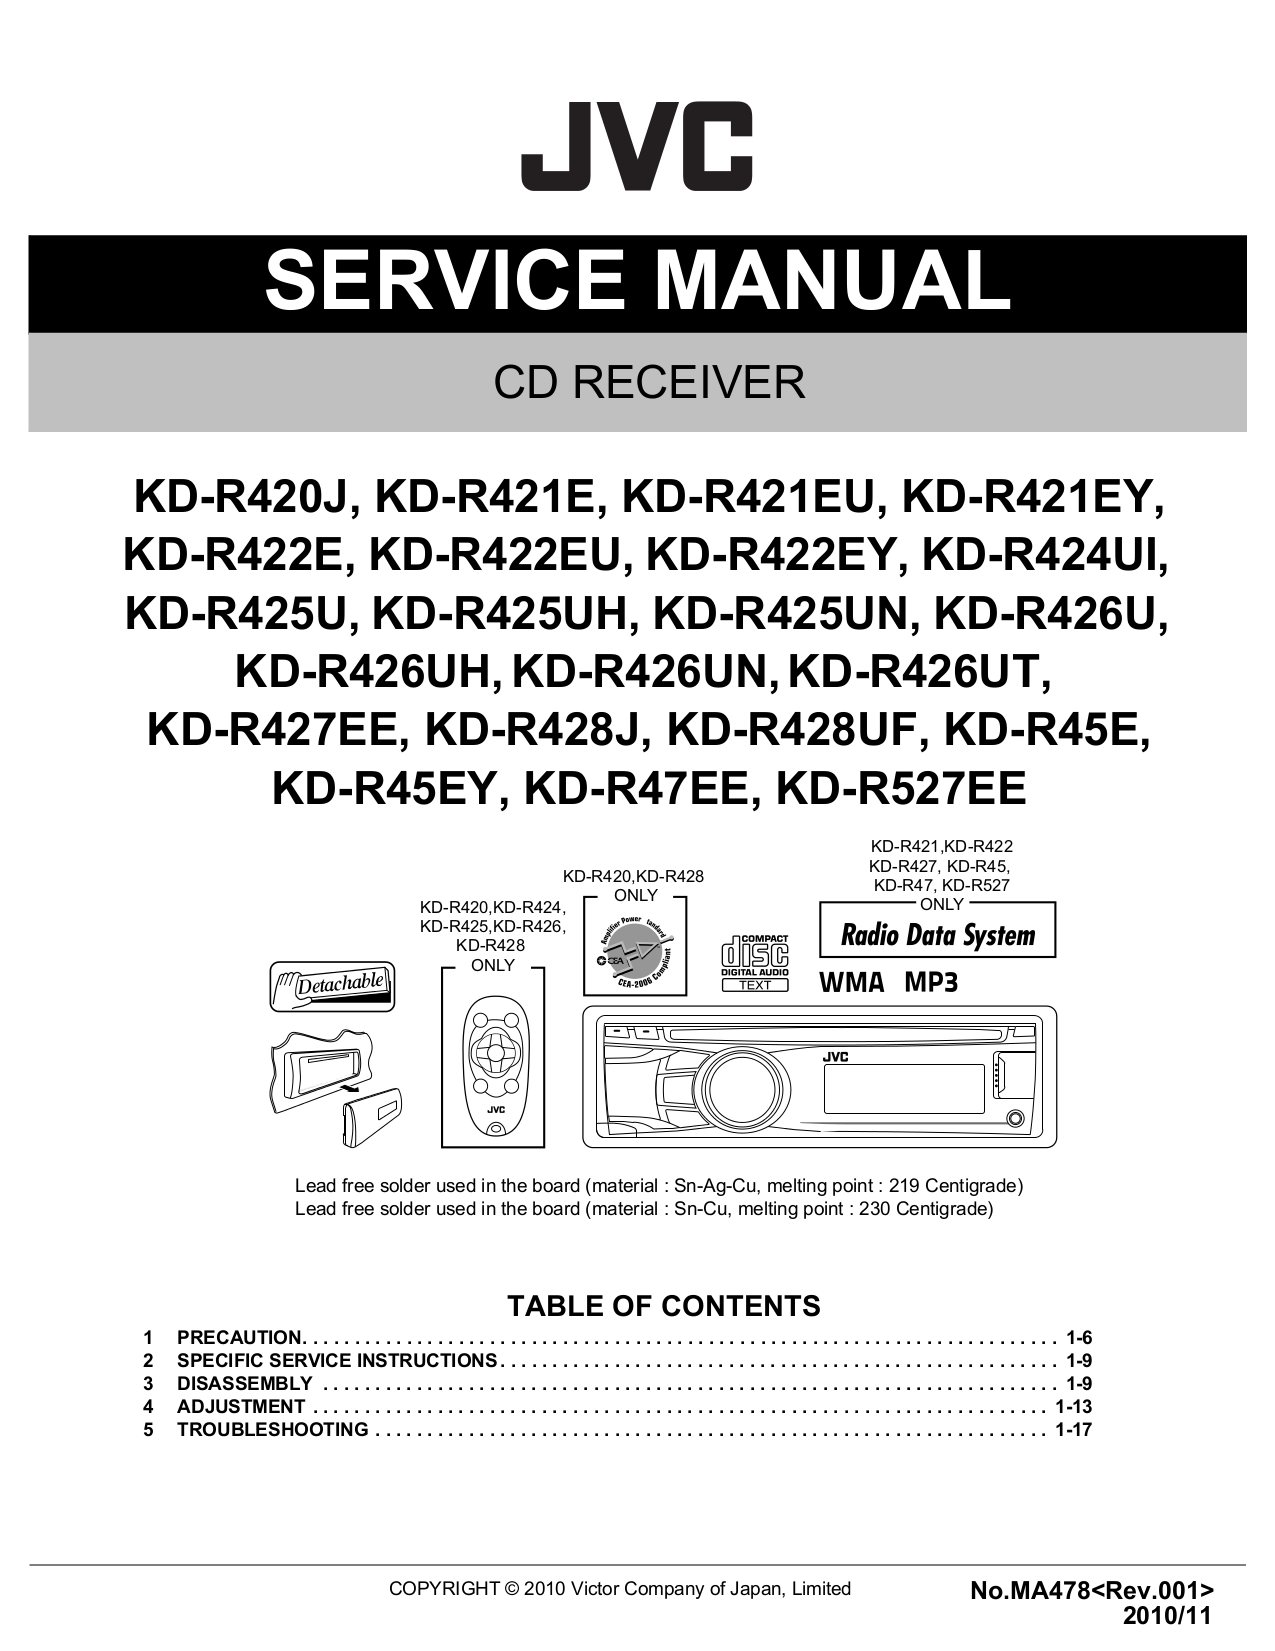 Ford Lrg 425 Service Manual